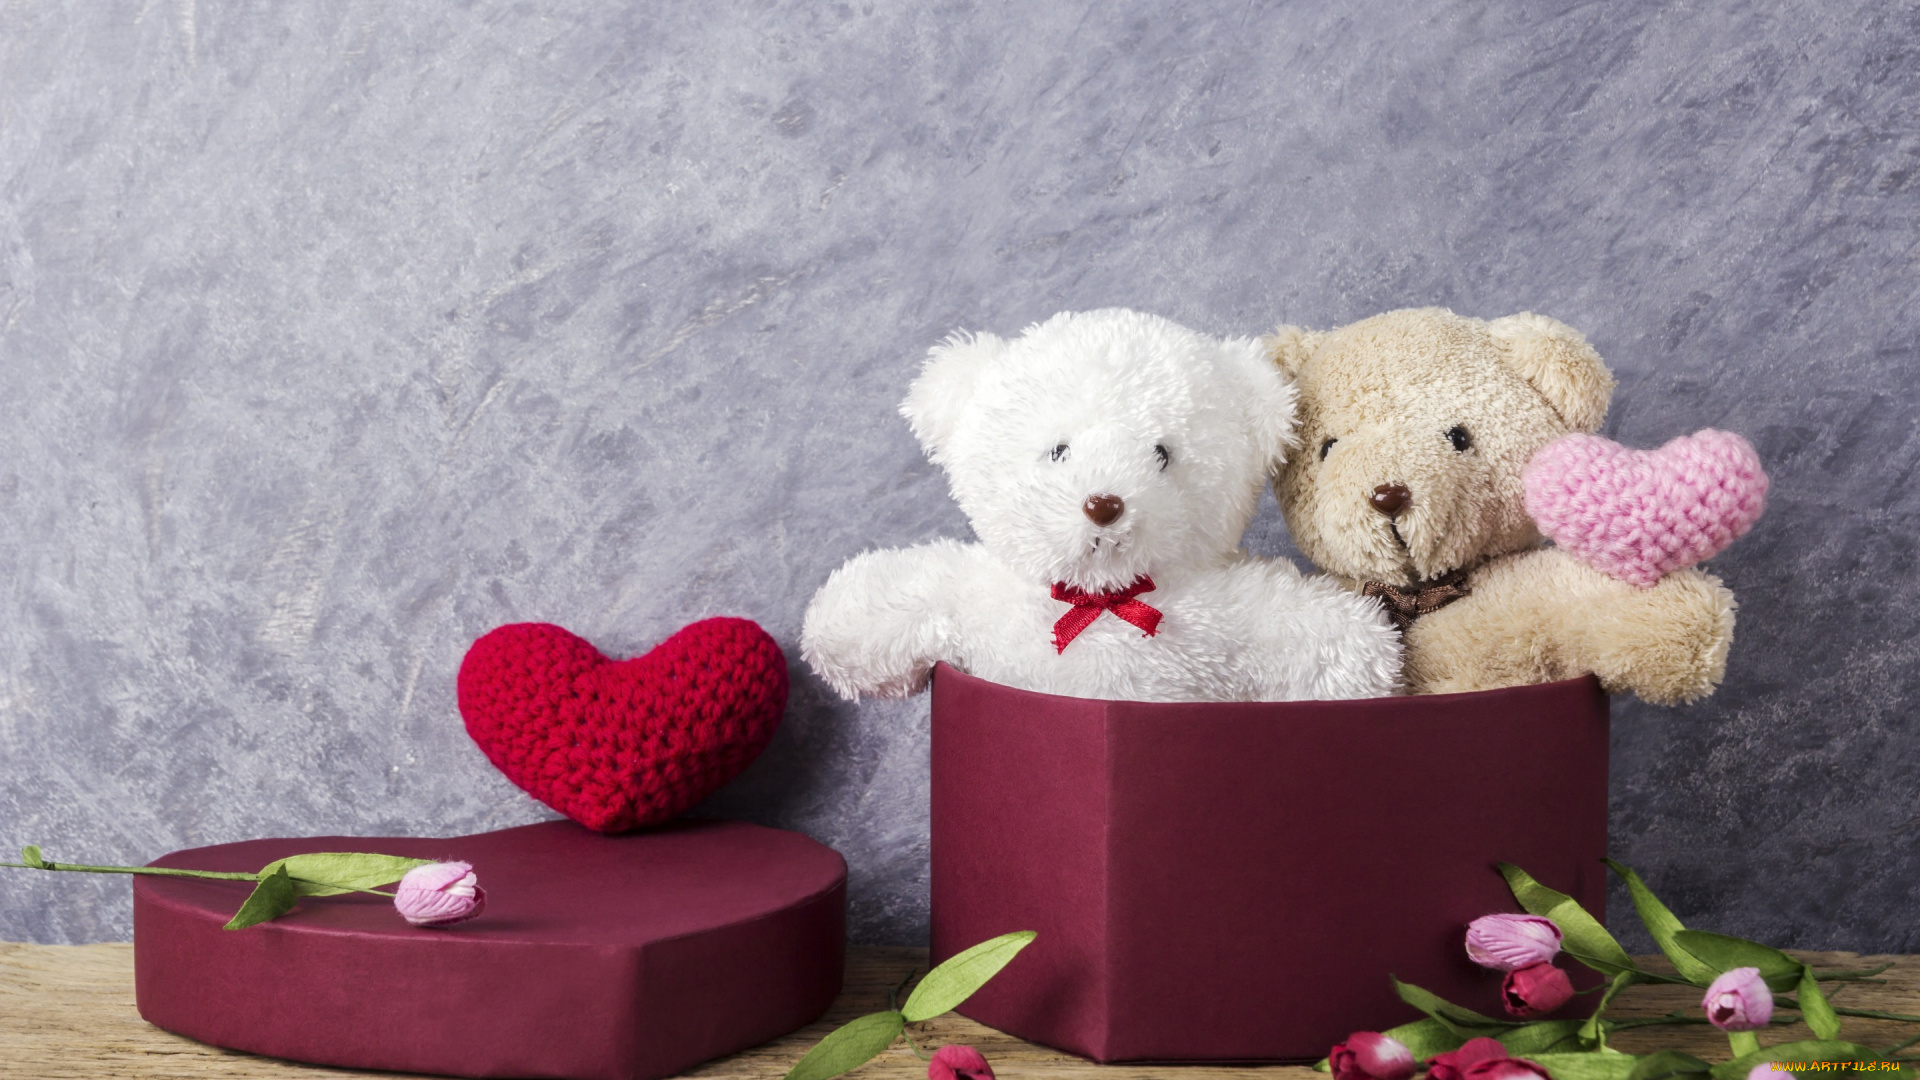 разное, игрушки, wood, love, любовь, gift, romantic, тюльпаны, cute, мишка, розовые, heart, цветы, сердце, pink, игрушка, tulips, bear, valentine's, day, flowers, подарок, teddy